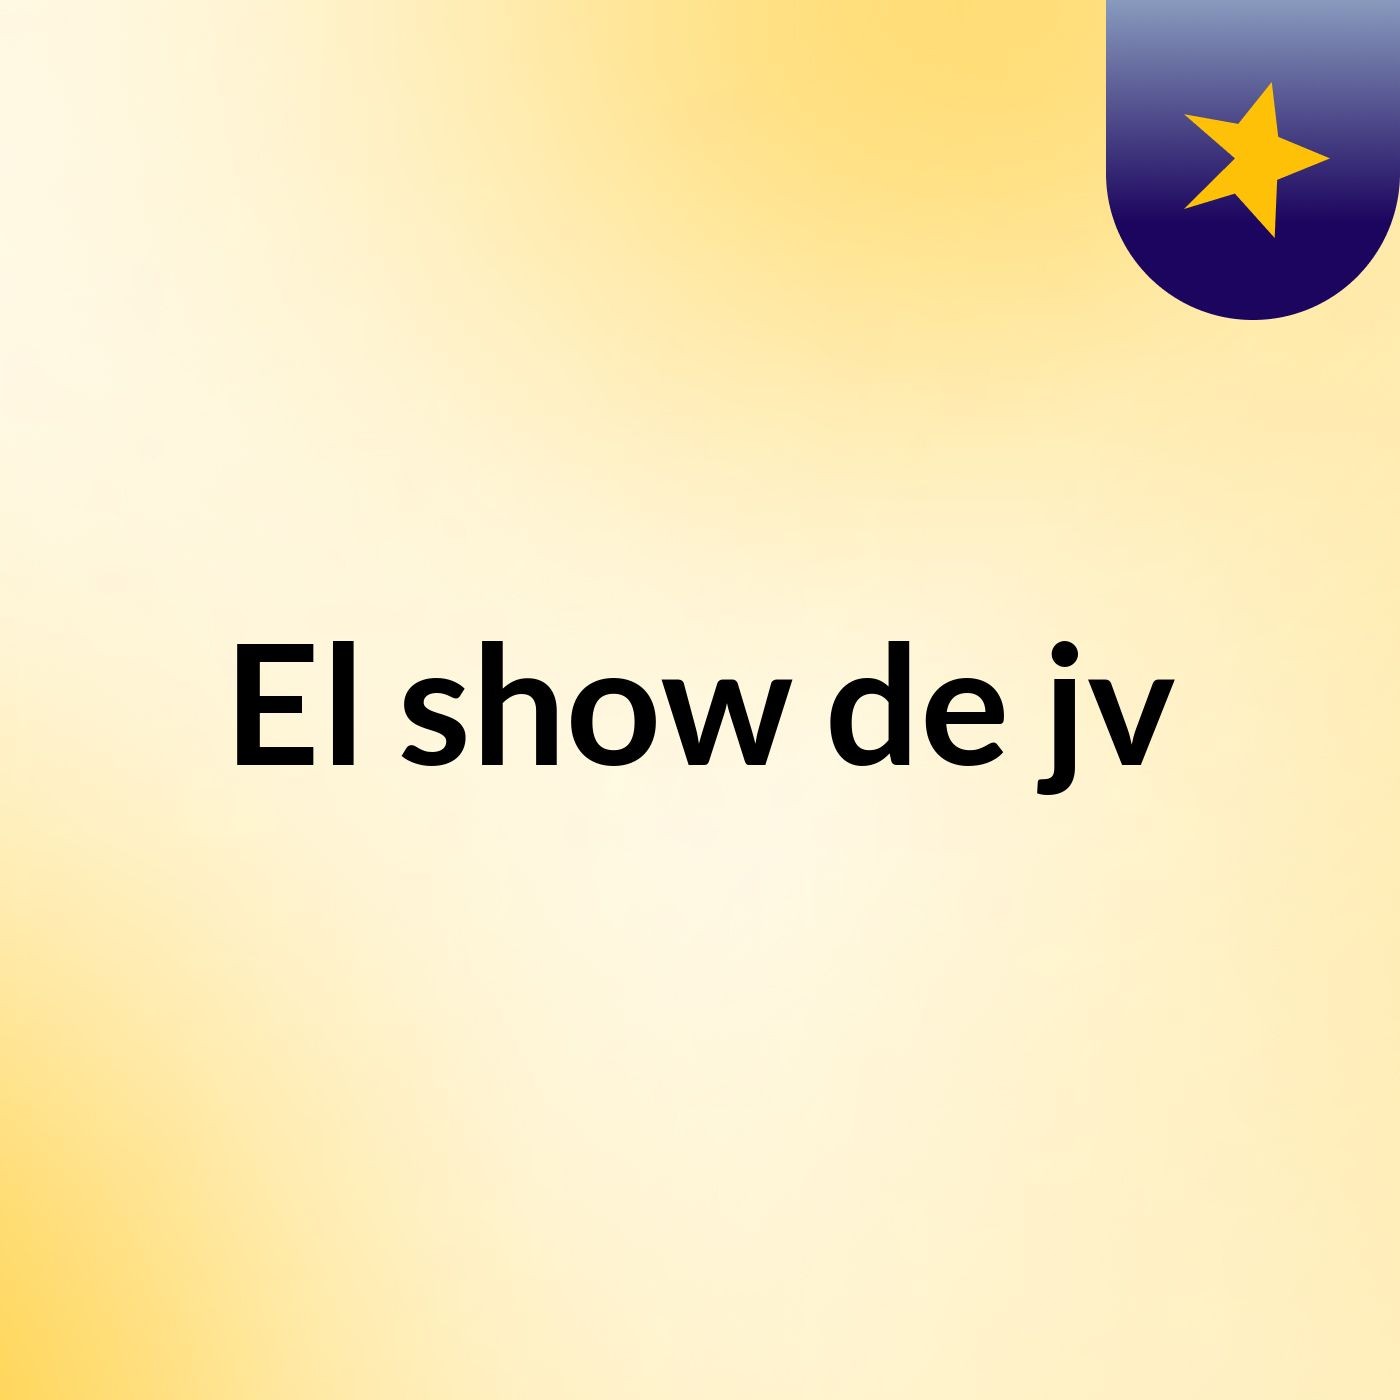 El show de jv